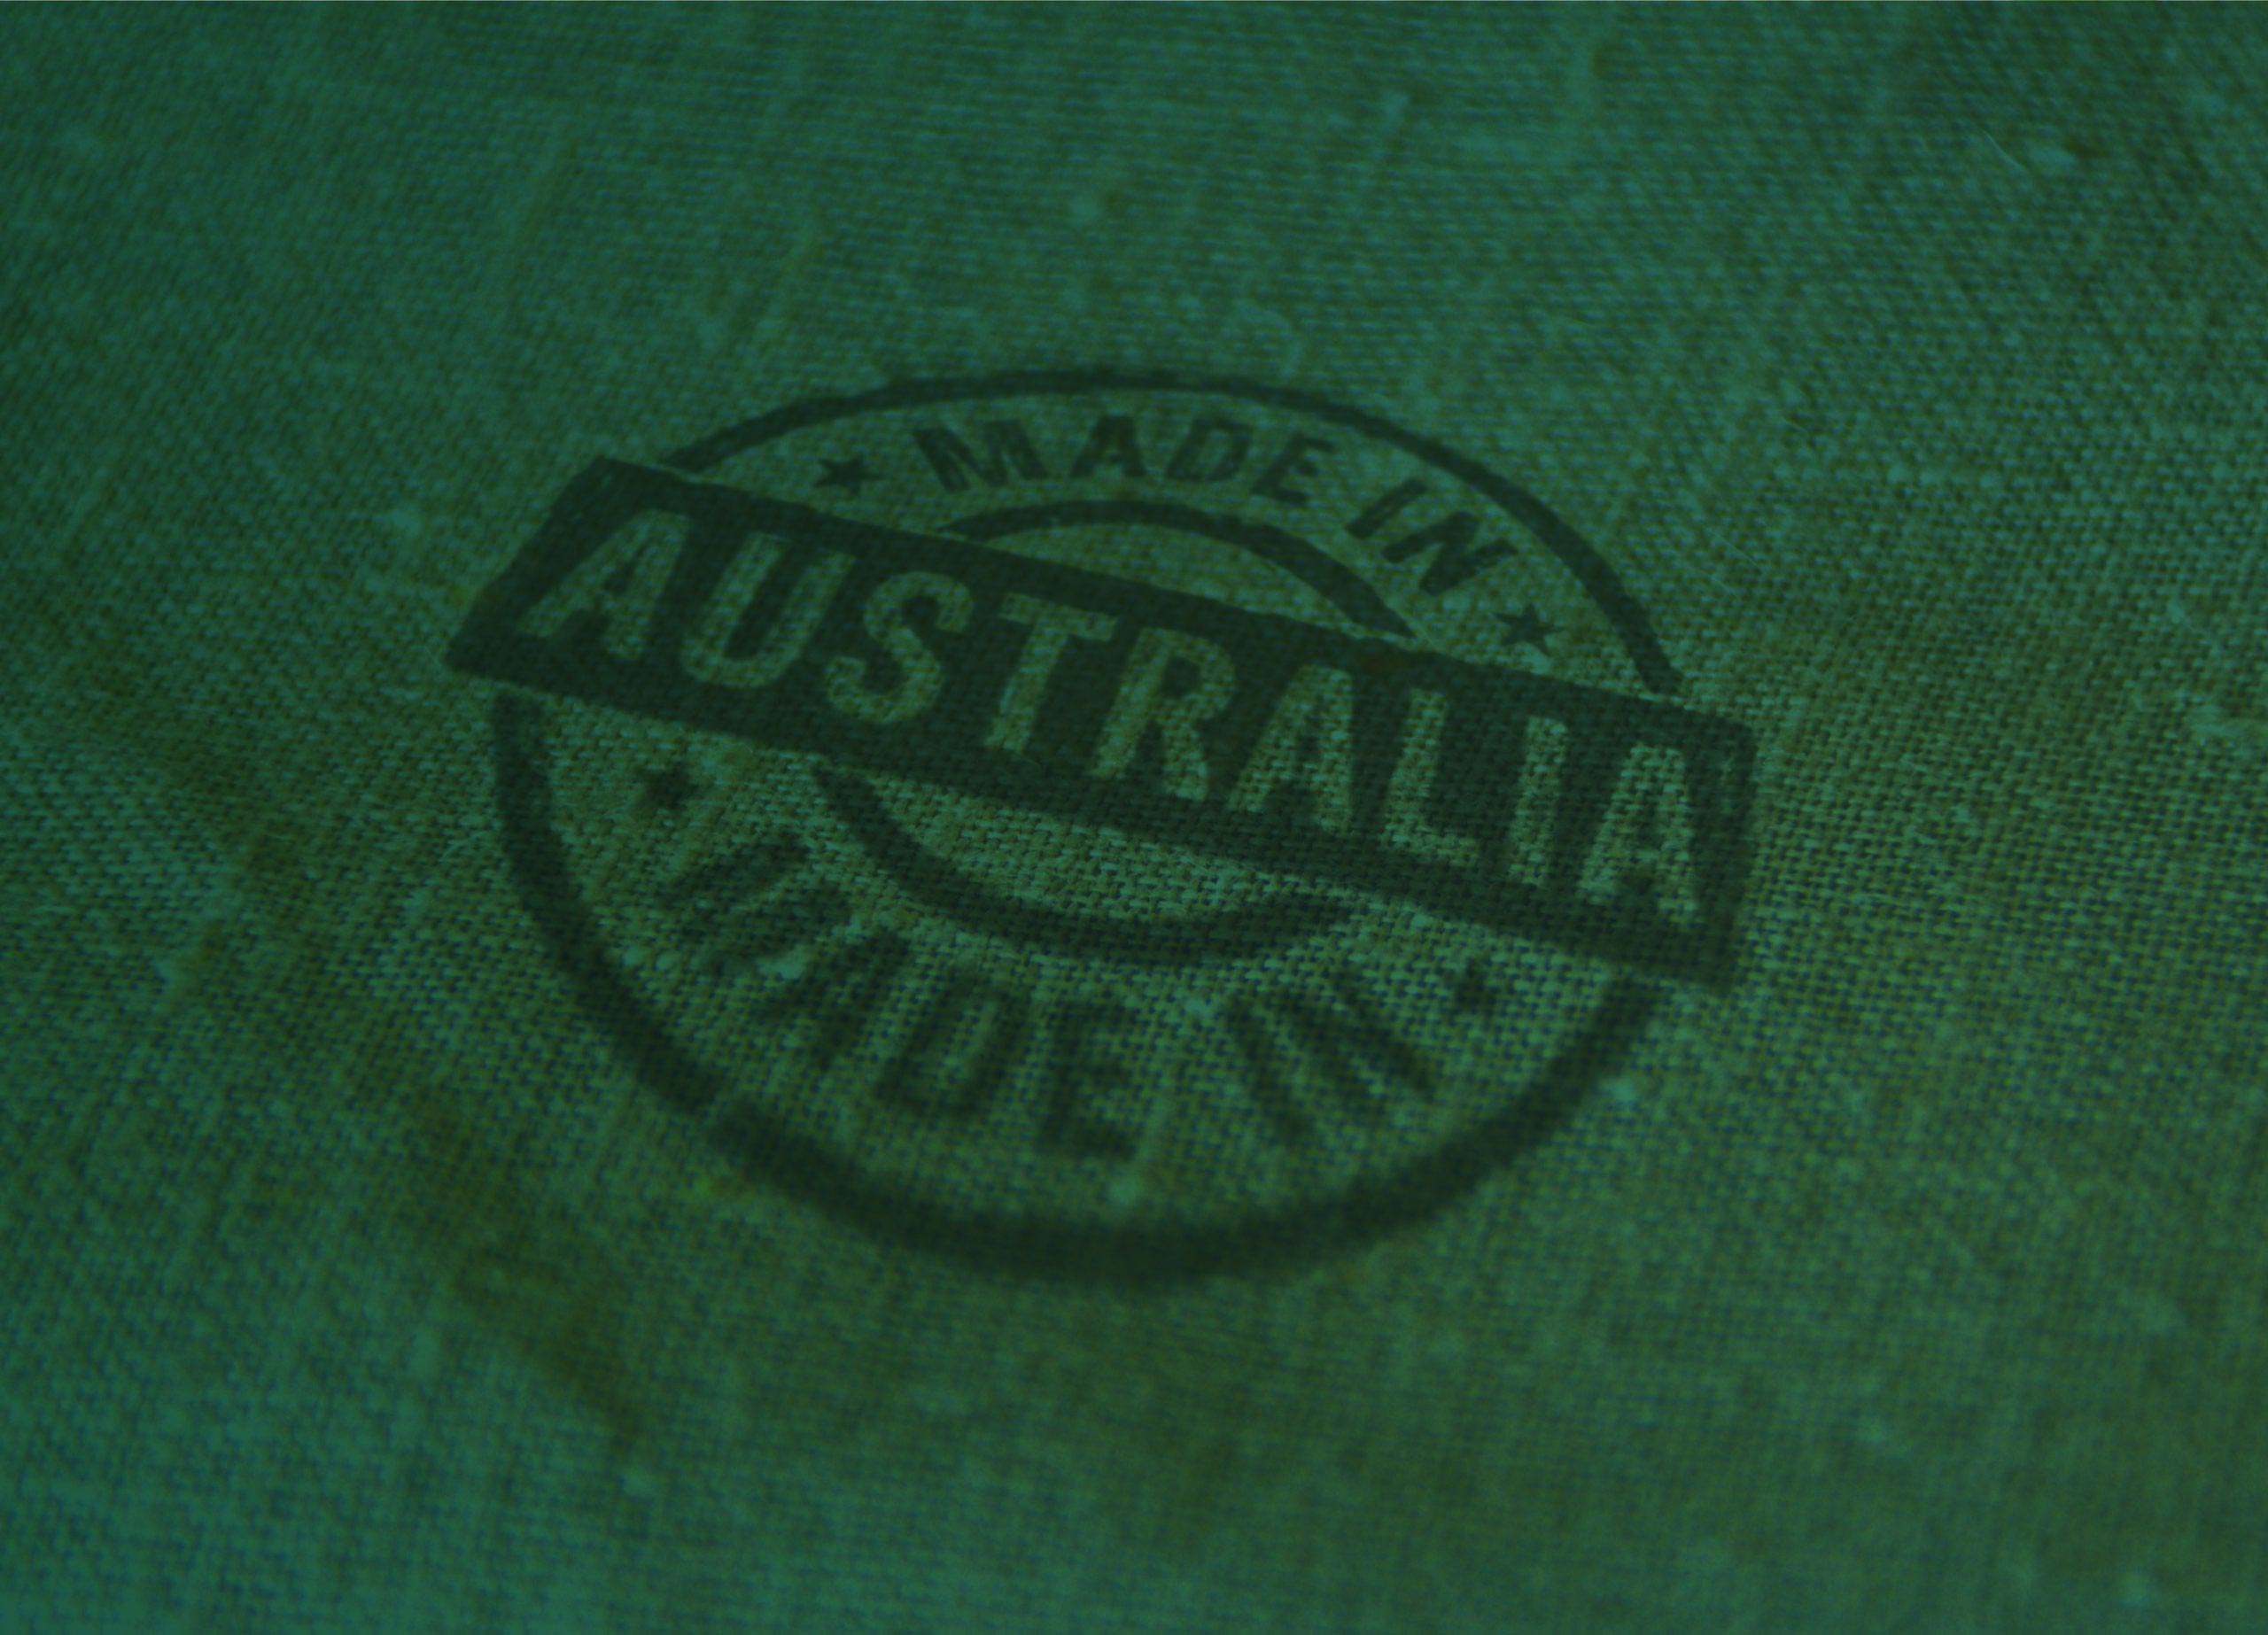 Made-in-Australia